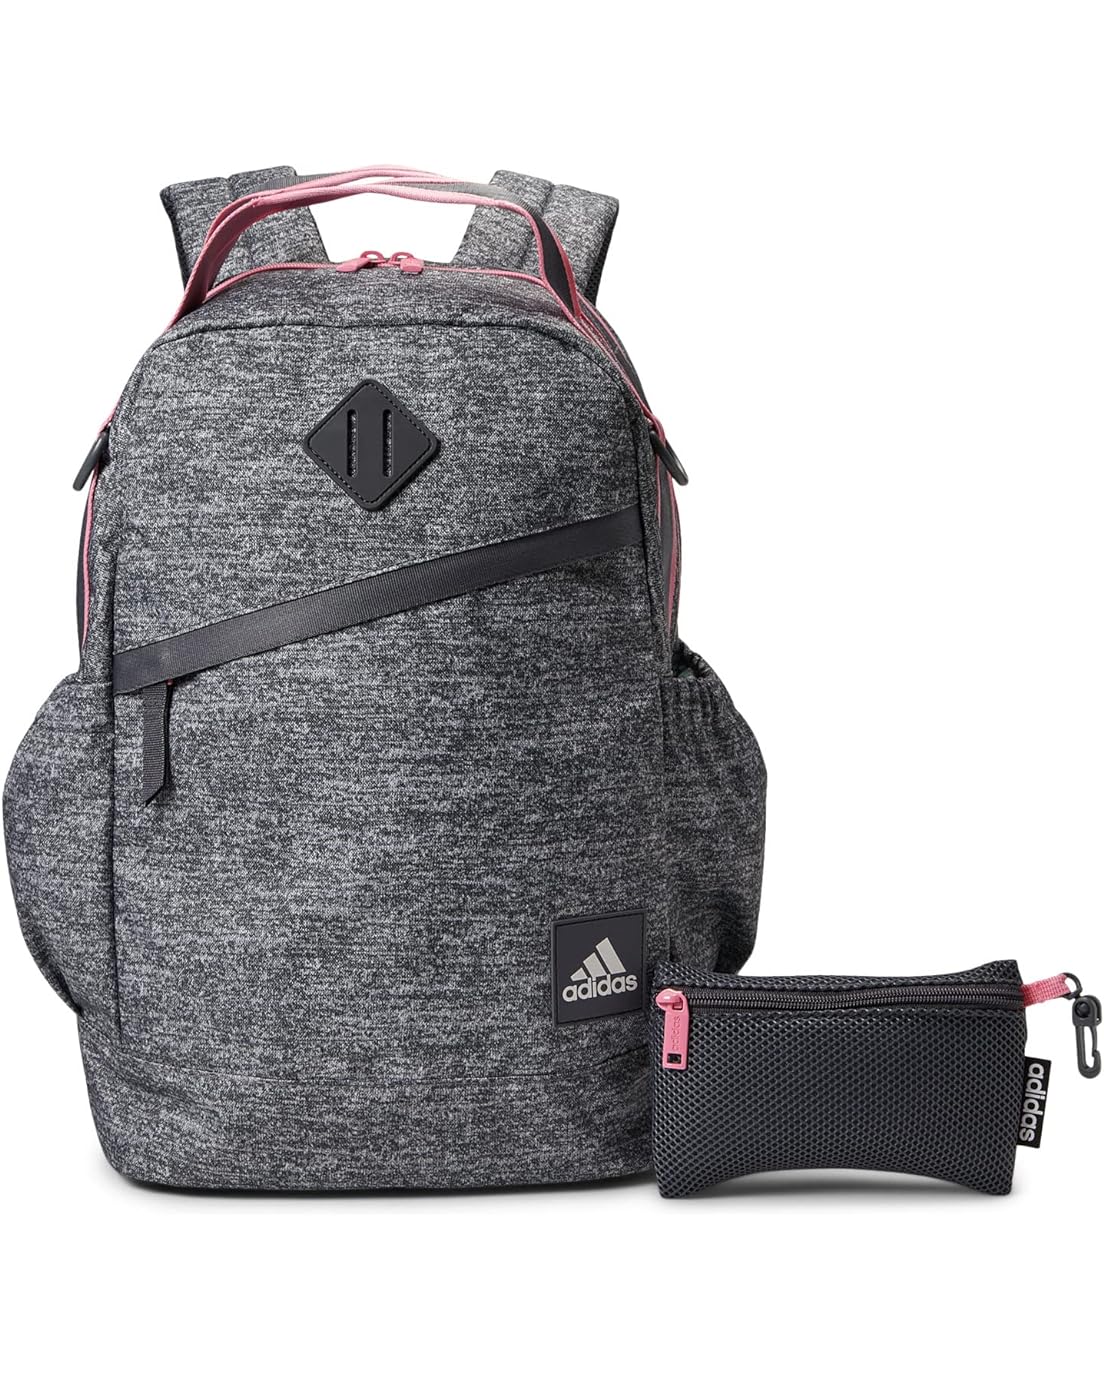 Adidas Squad Backpack